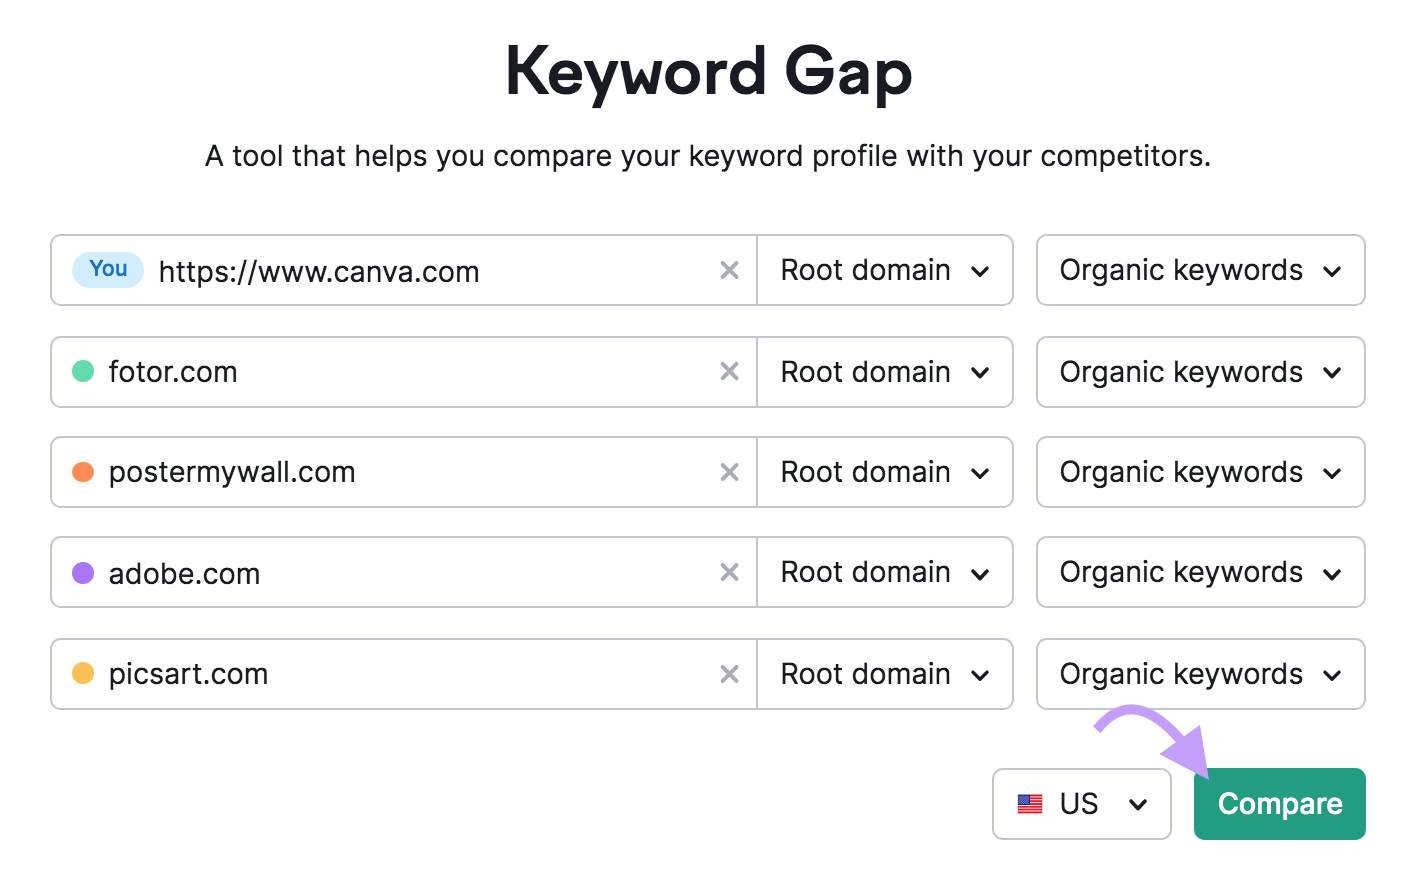 "canva.com" and competitors "fotor.com" "postermywall.com" "adobe.com" and "picsart.com" entered into the Keyword Gap tool